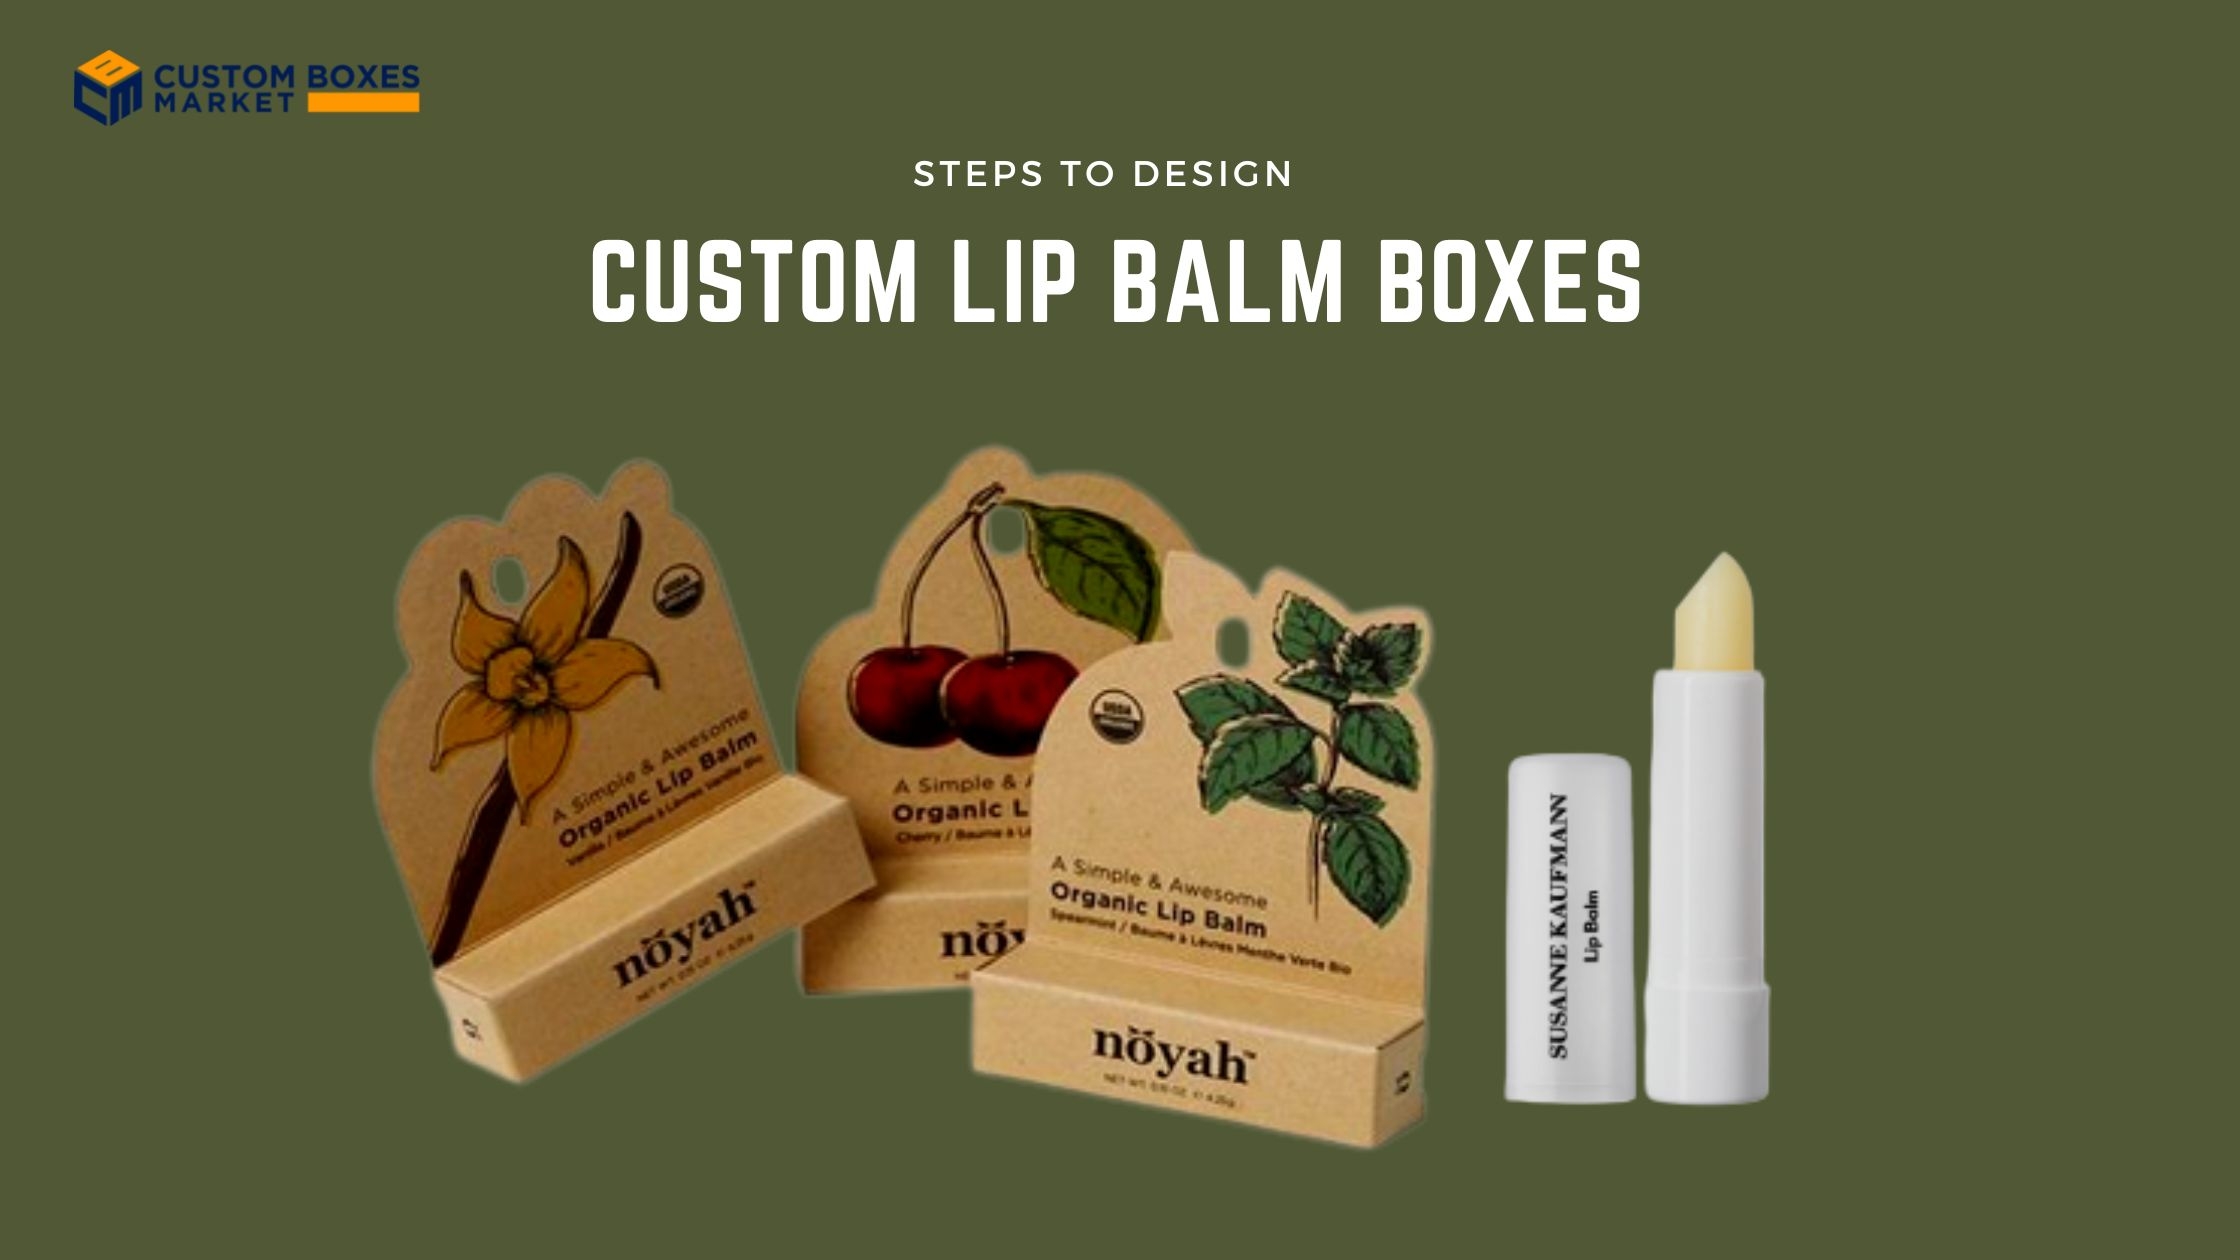 Steps To Design Custom Lip Balm Boxes Using Innovative Ideas